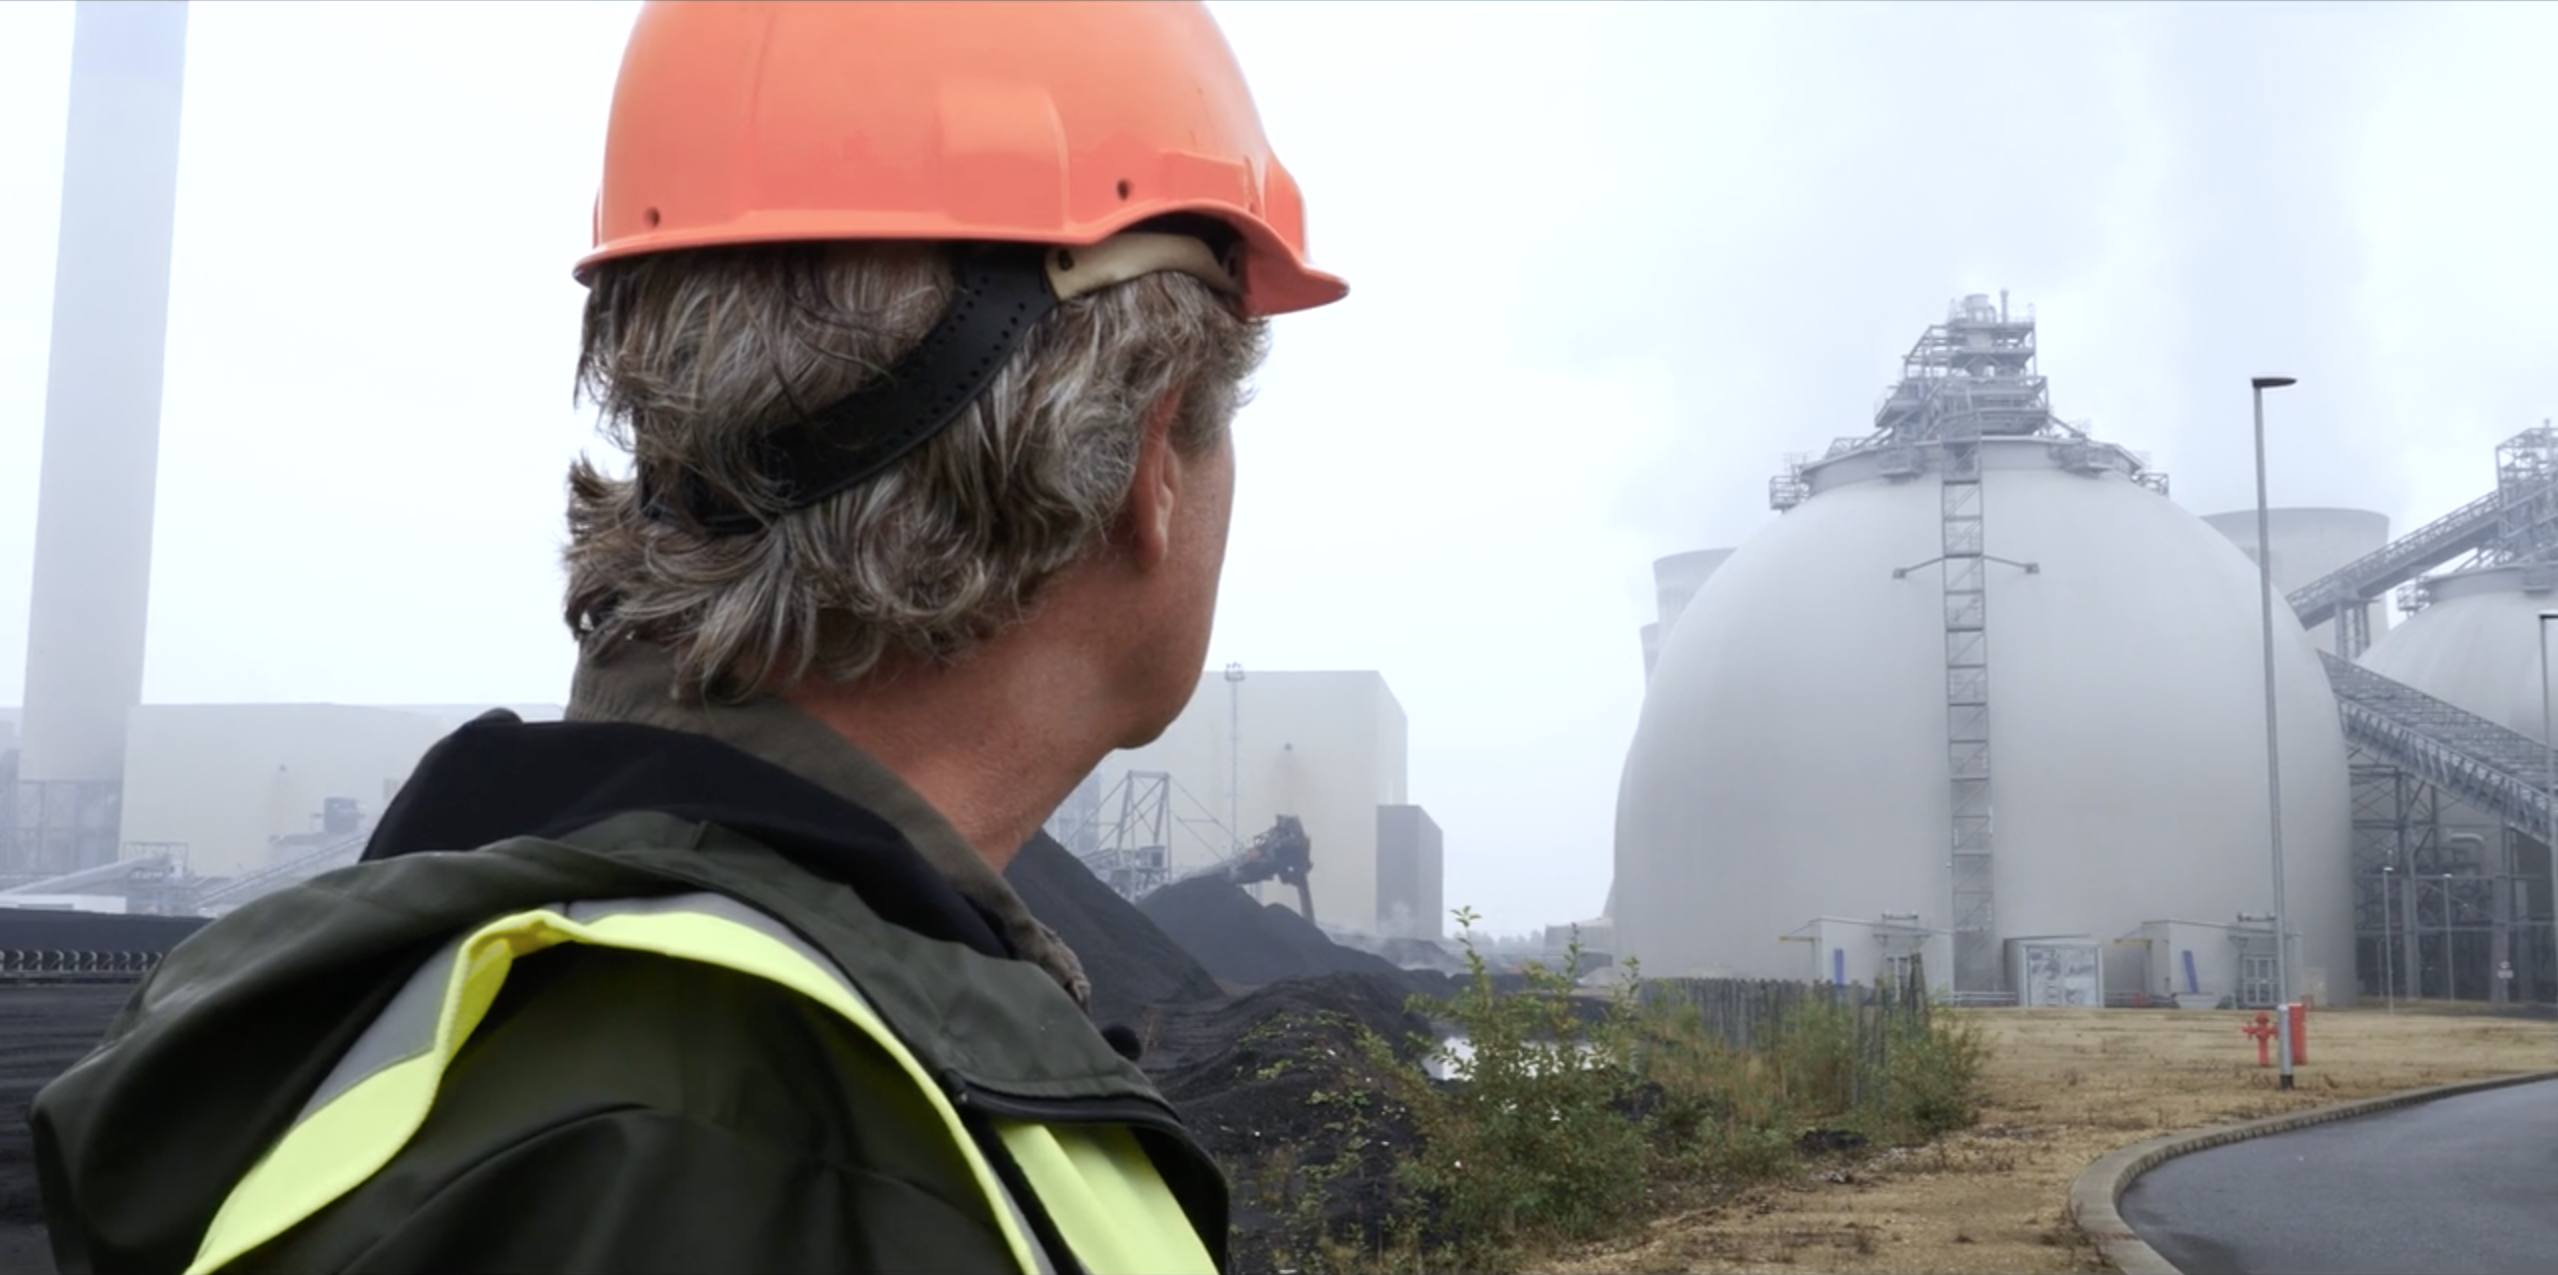 Tony Juniper at Drax Power Station between coal stock and biomass wood pellet storage domes